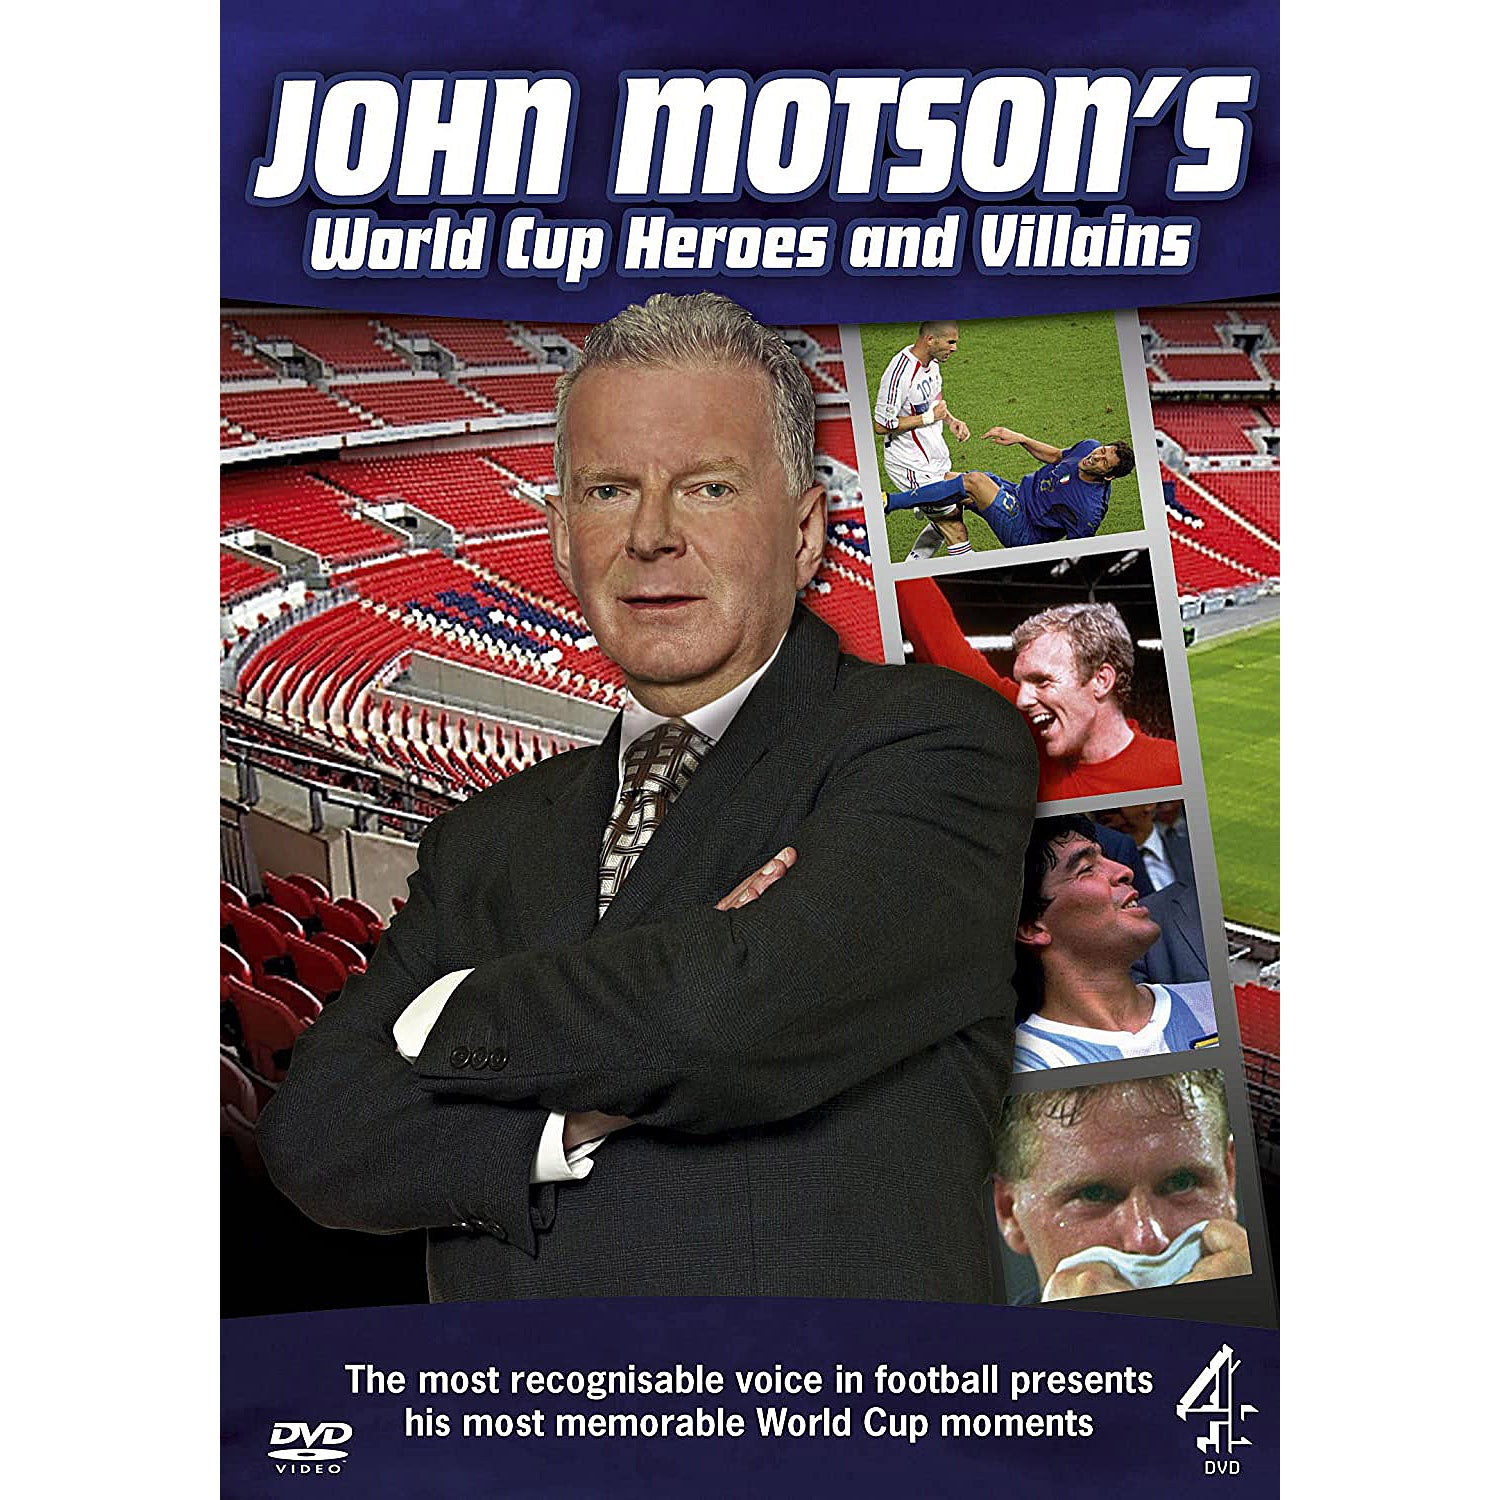 John Motson's World Cup Heroes and Villains